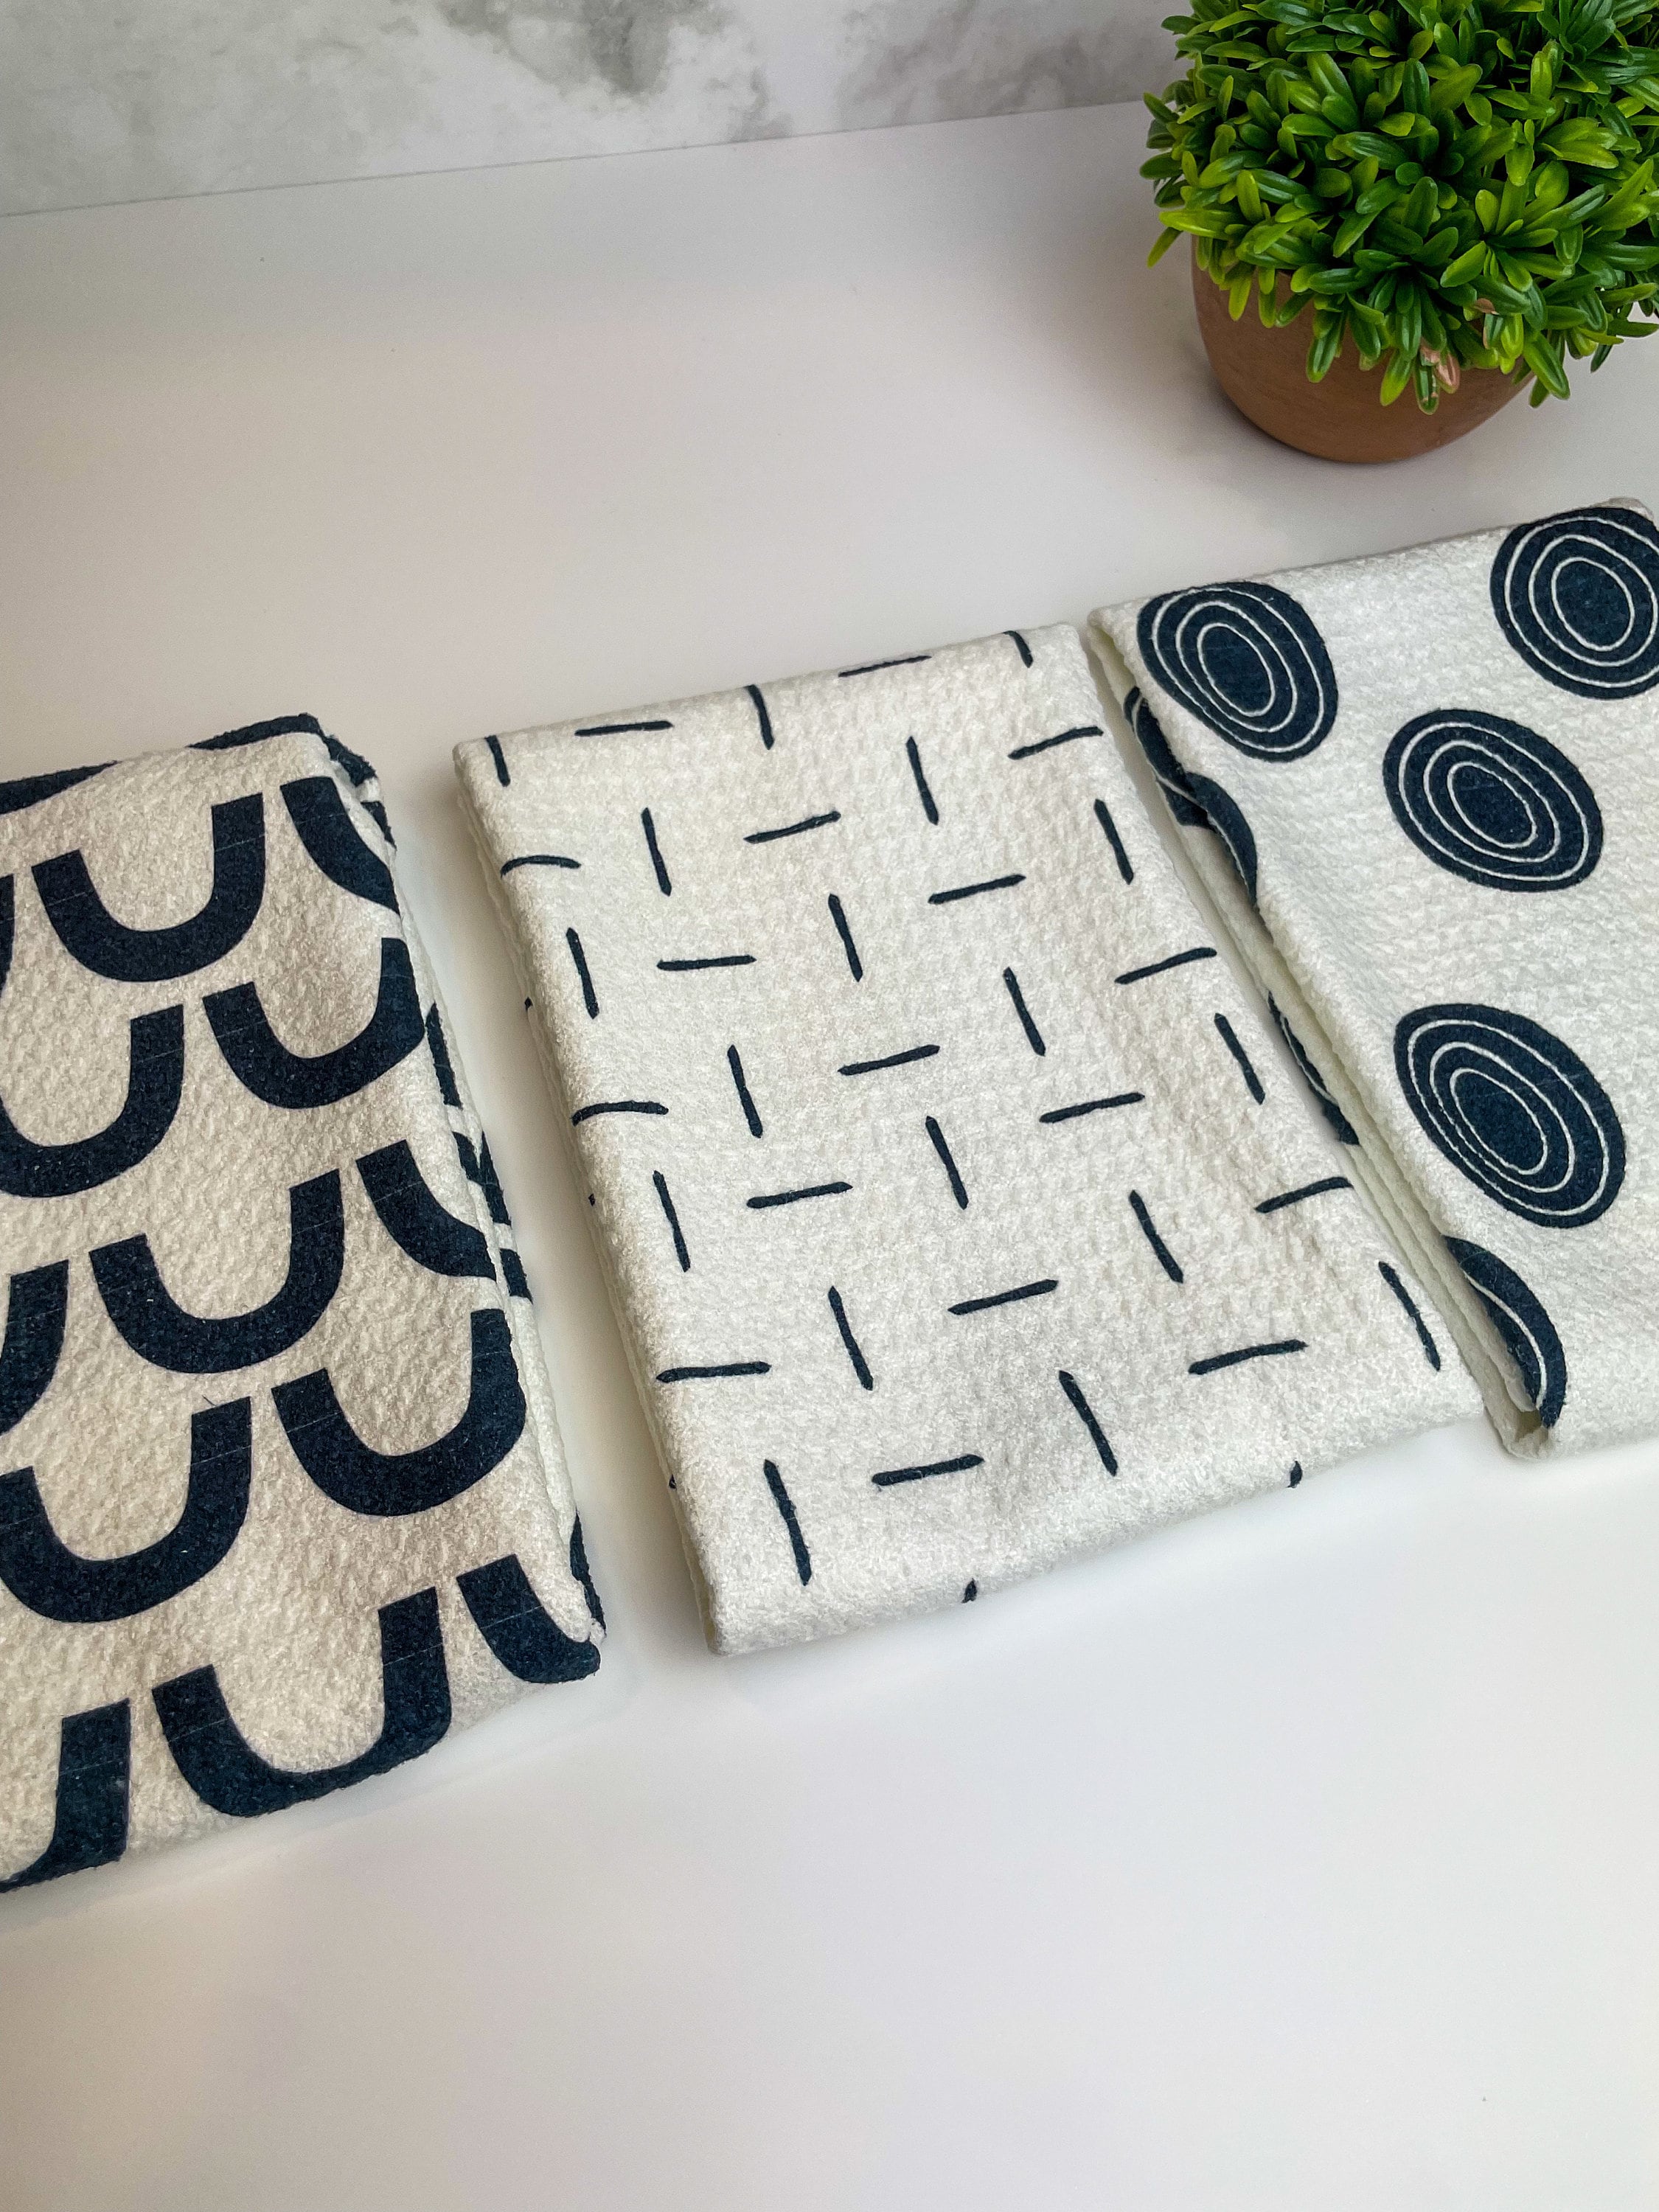 Geometry Microfiber Kitchen Towels (Set of 2)